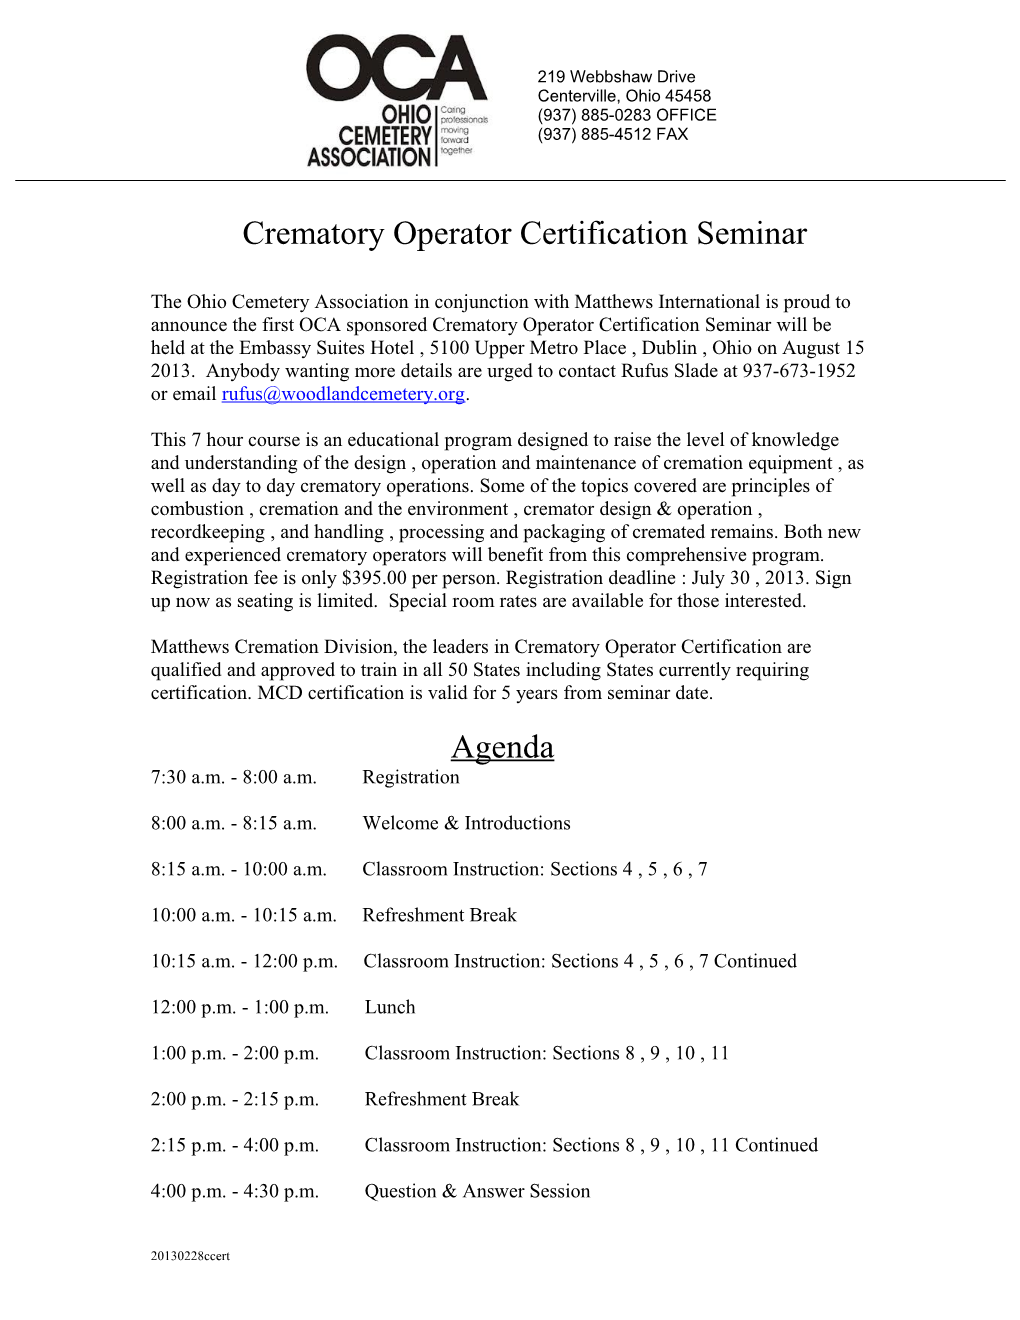 Crematory Operator Certification Seminar